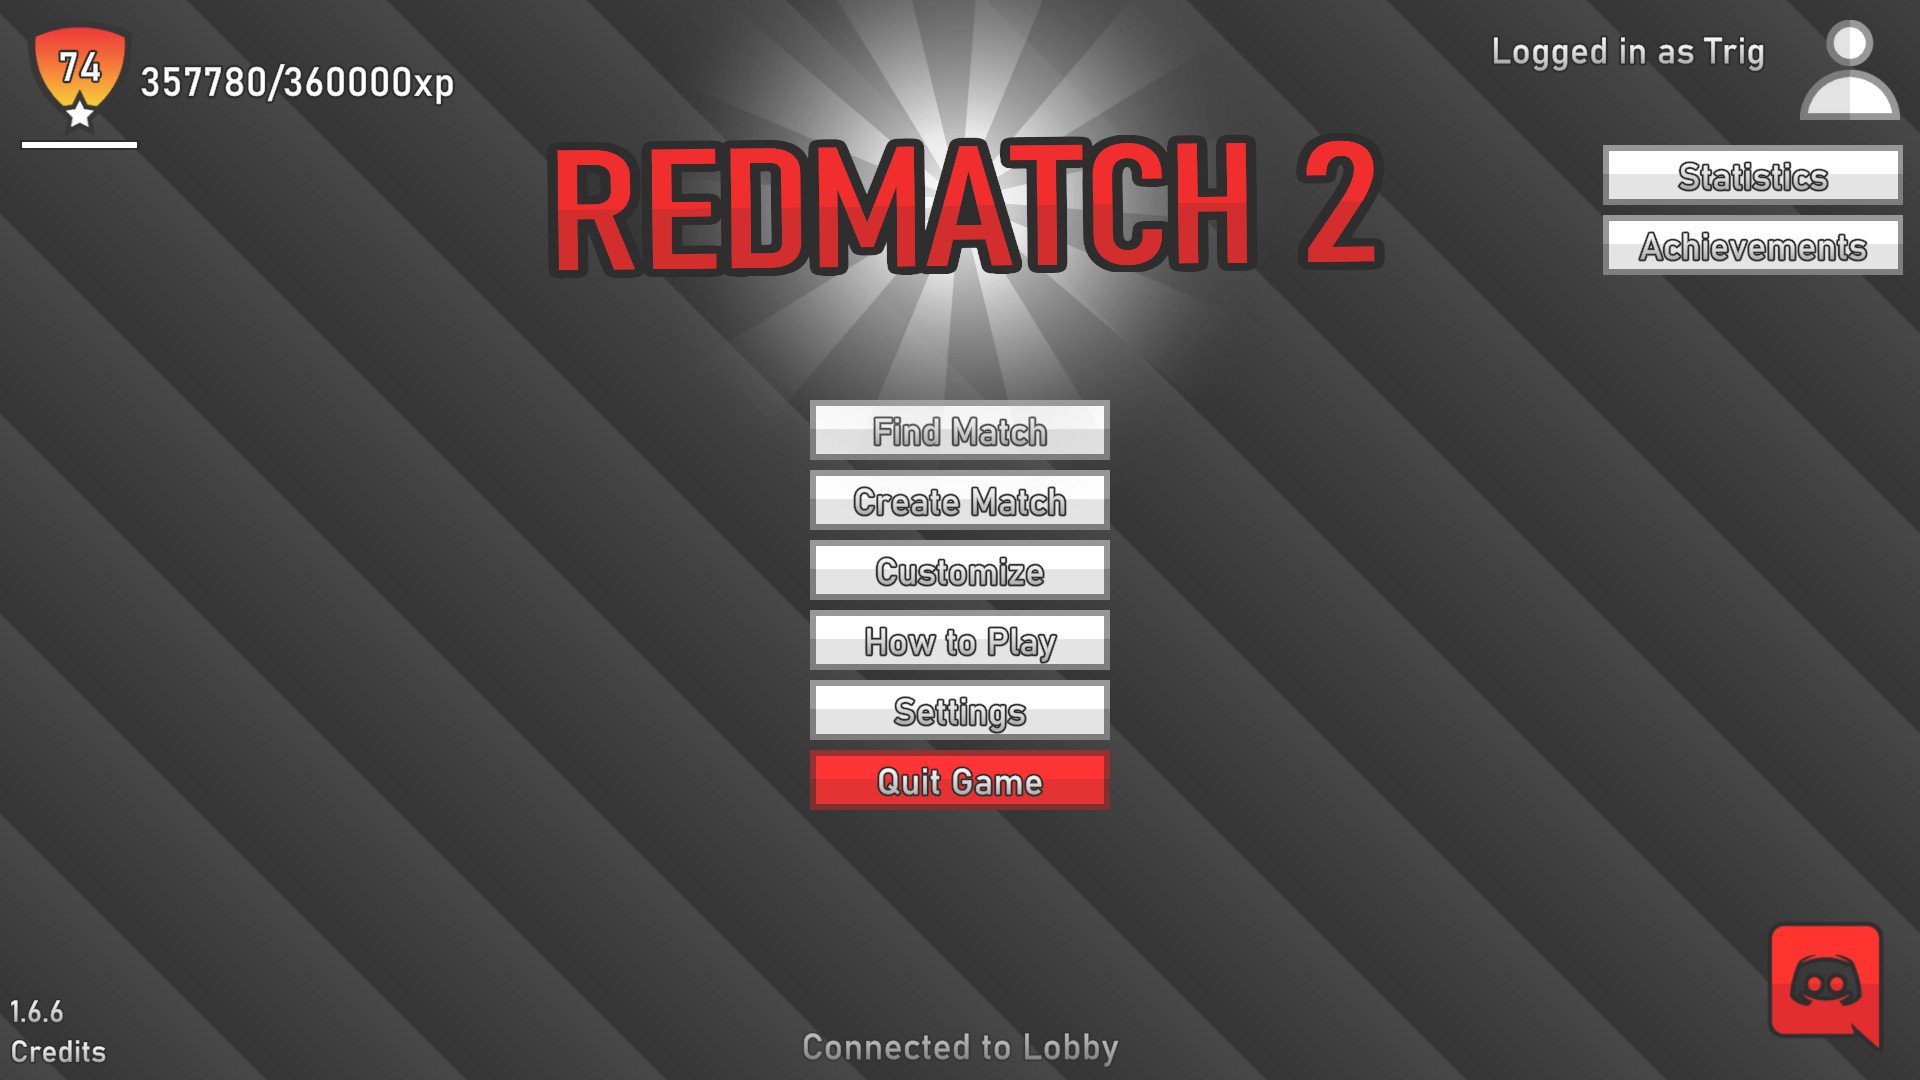 Redmatch 2 - Achievements - 1.6.5